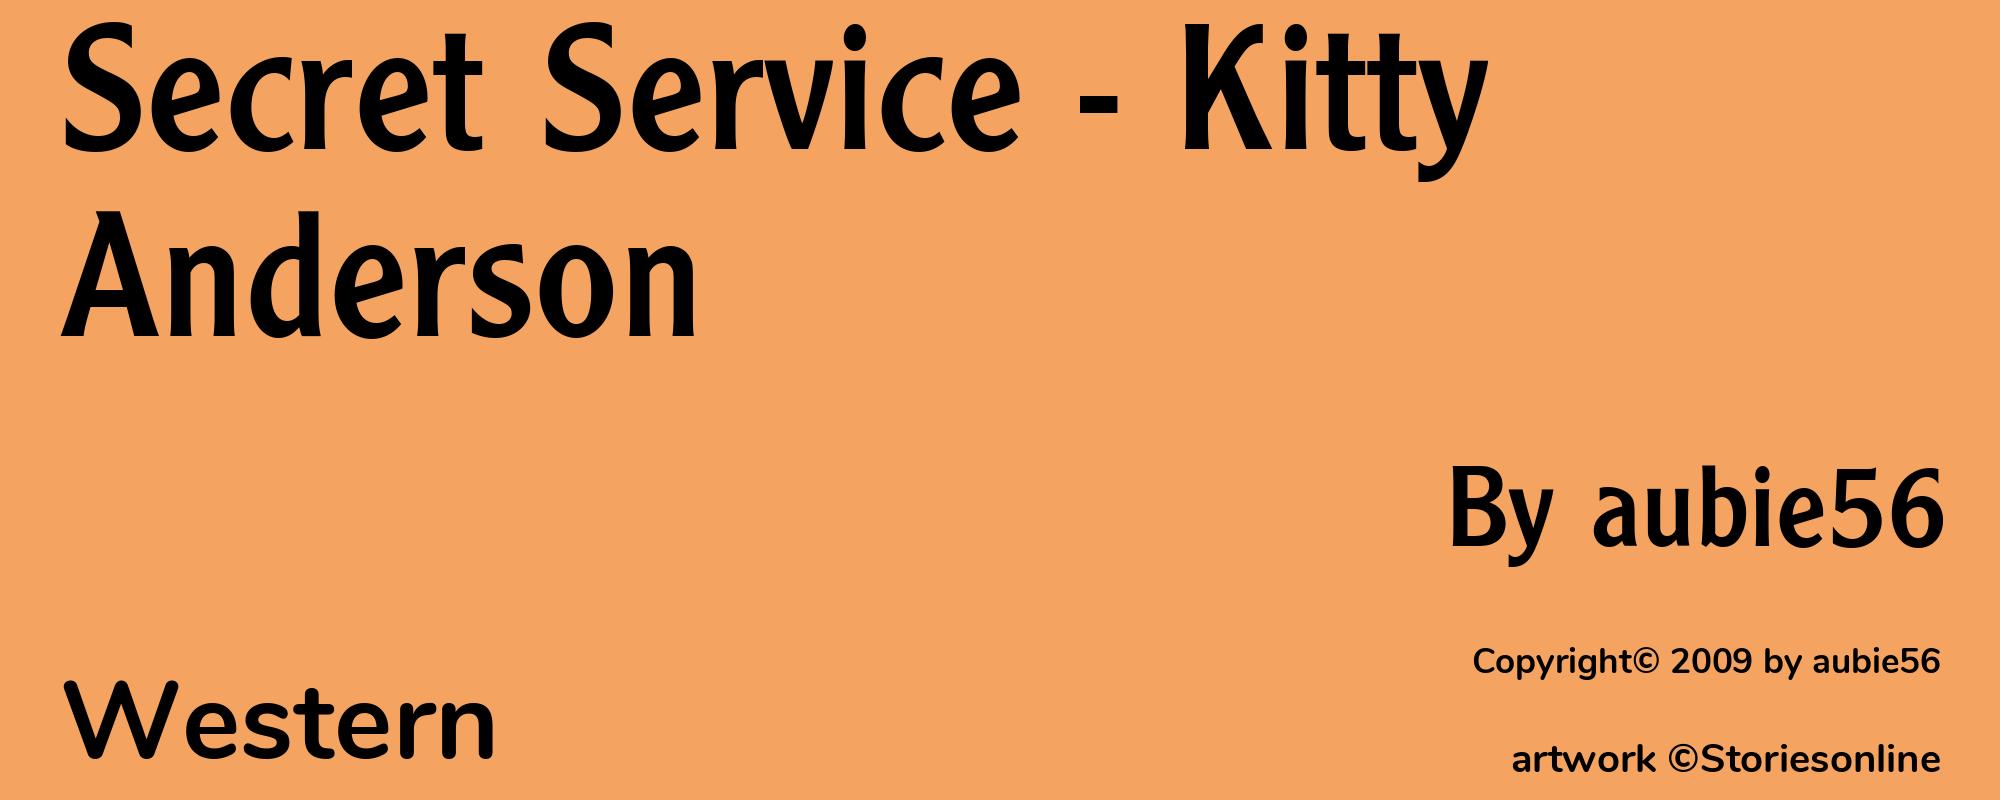 Secret Service - Kitty Anderson - Cover